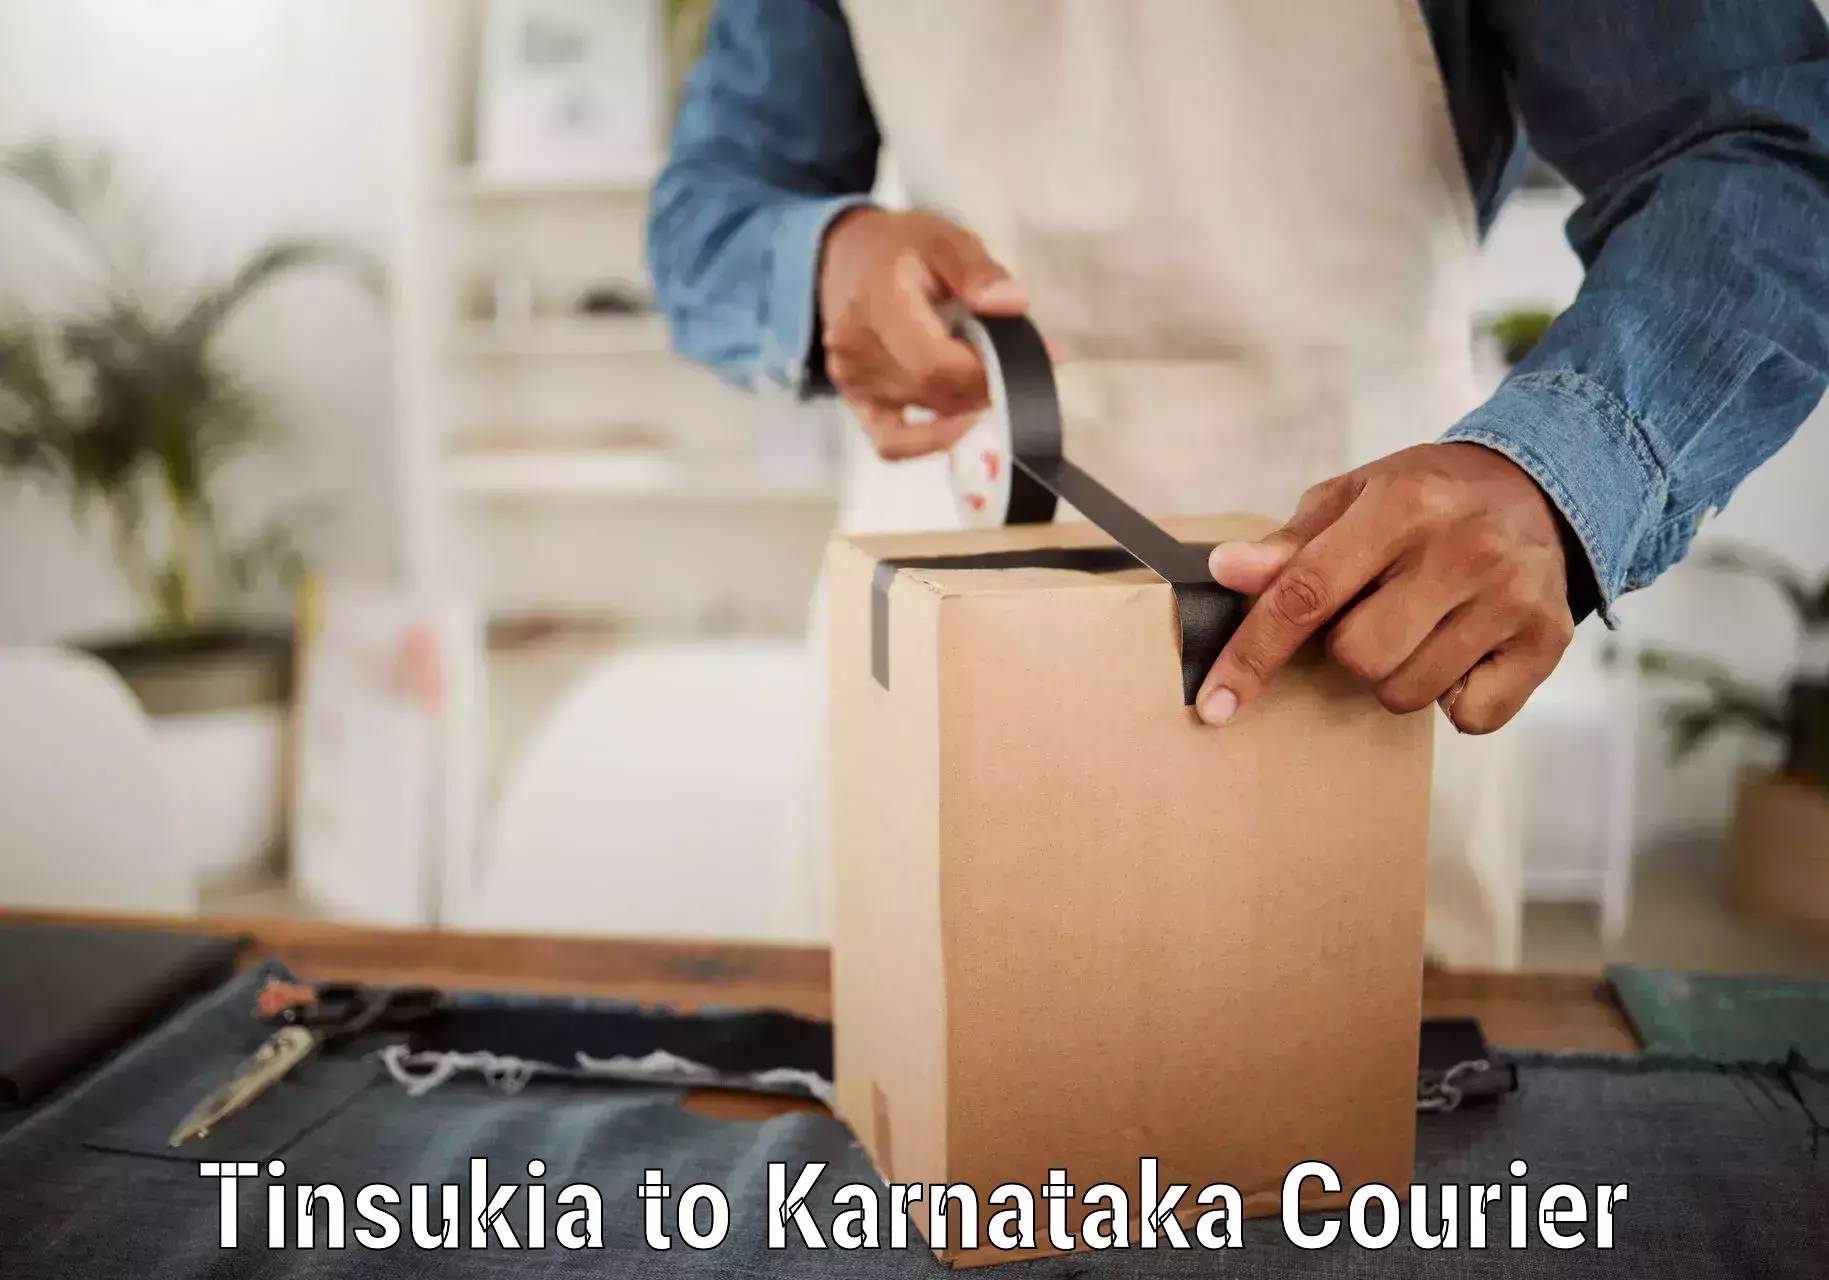 Affordable parcel service Tinsukia to Karnataka